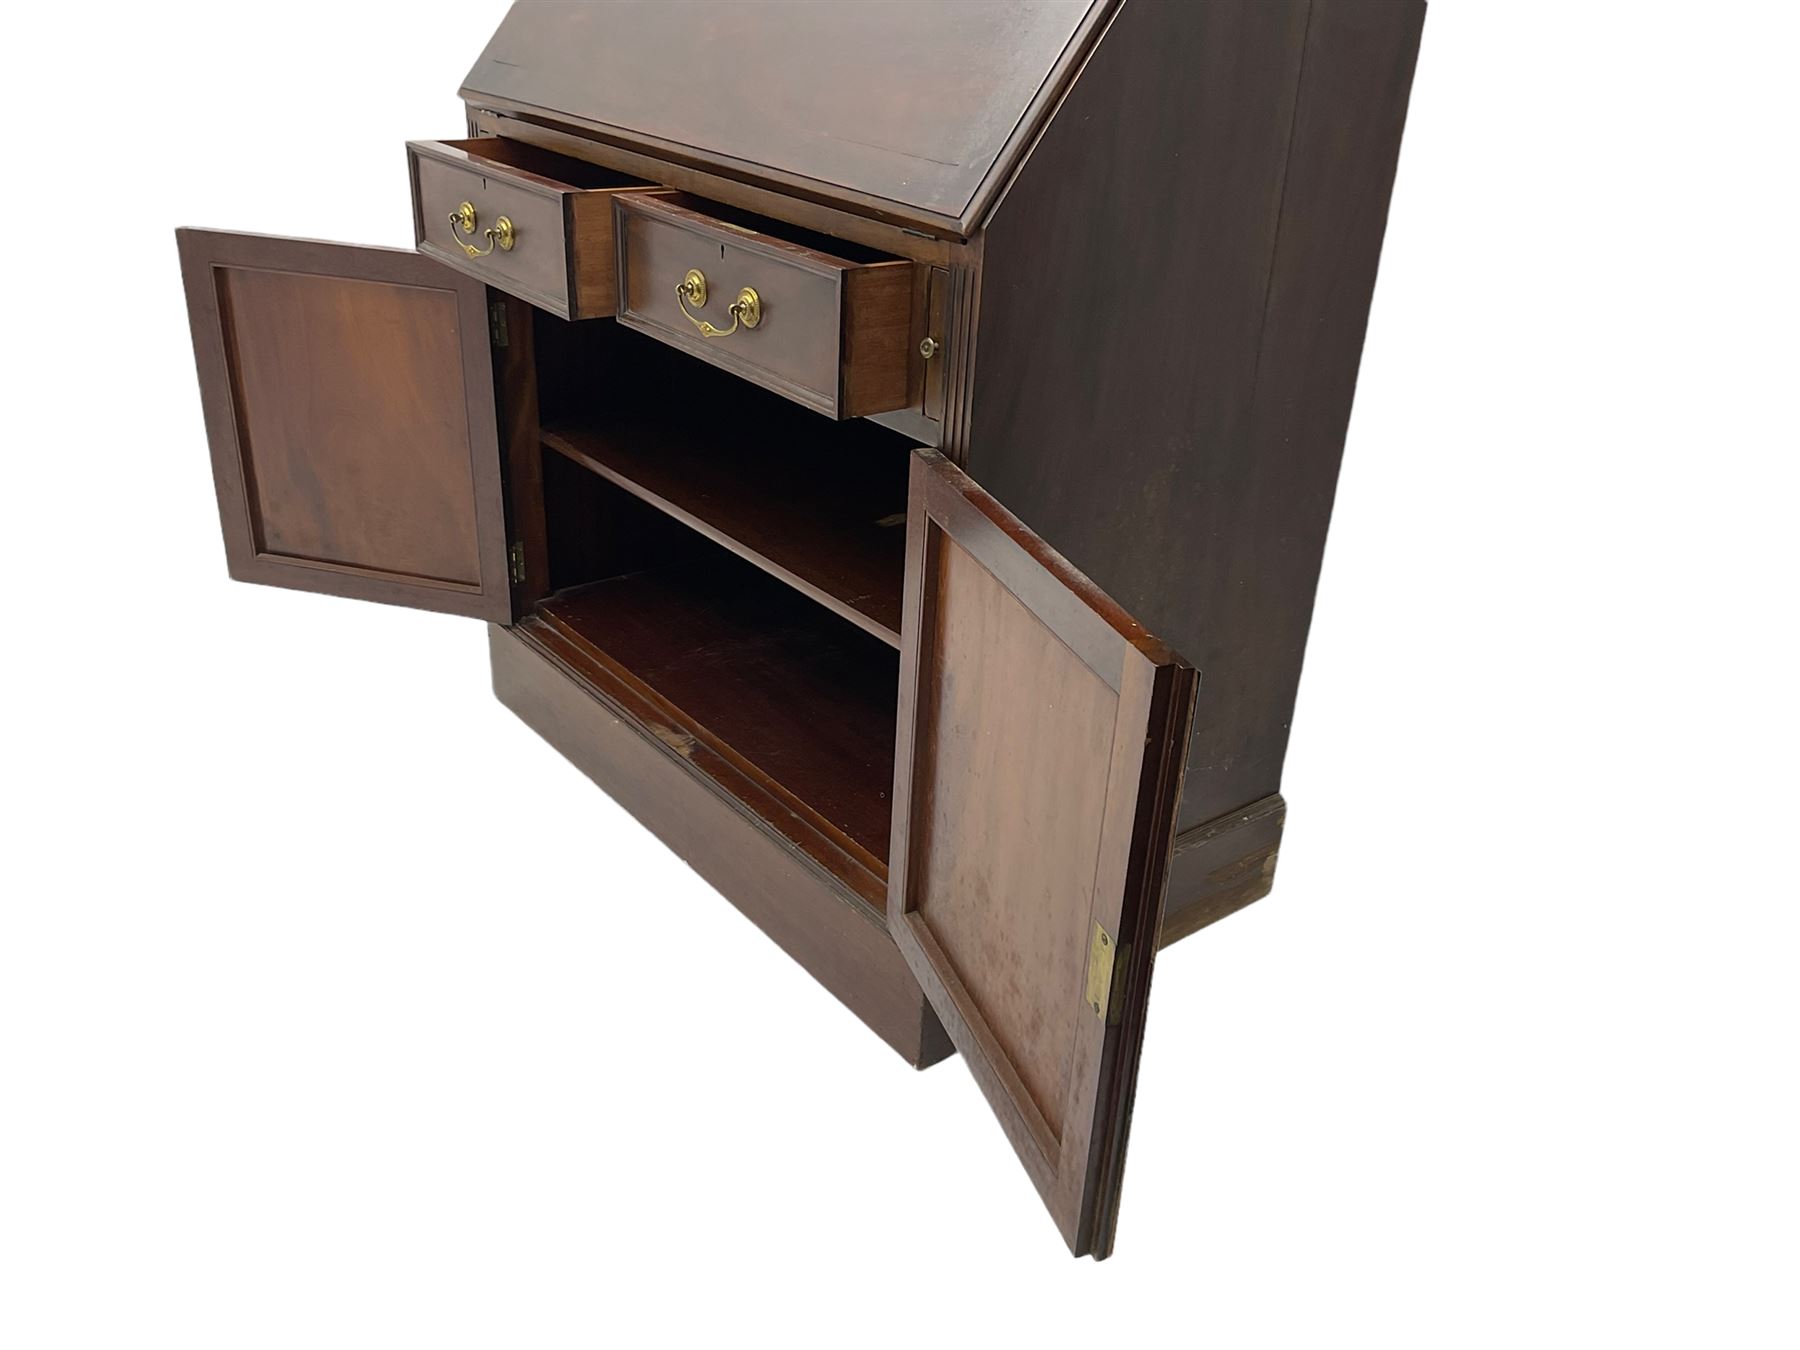 Late 19th century mahogany bureau bookcase - Image 5 of 5